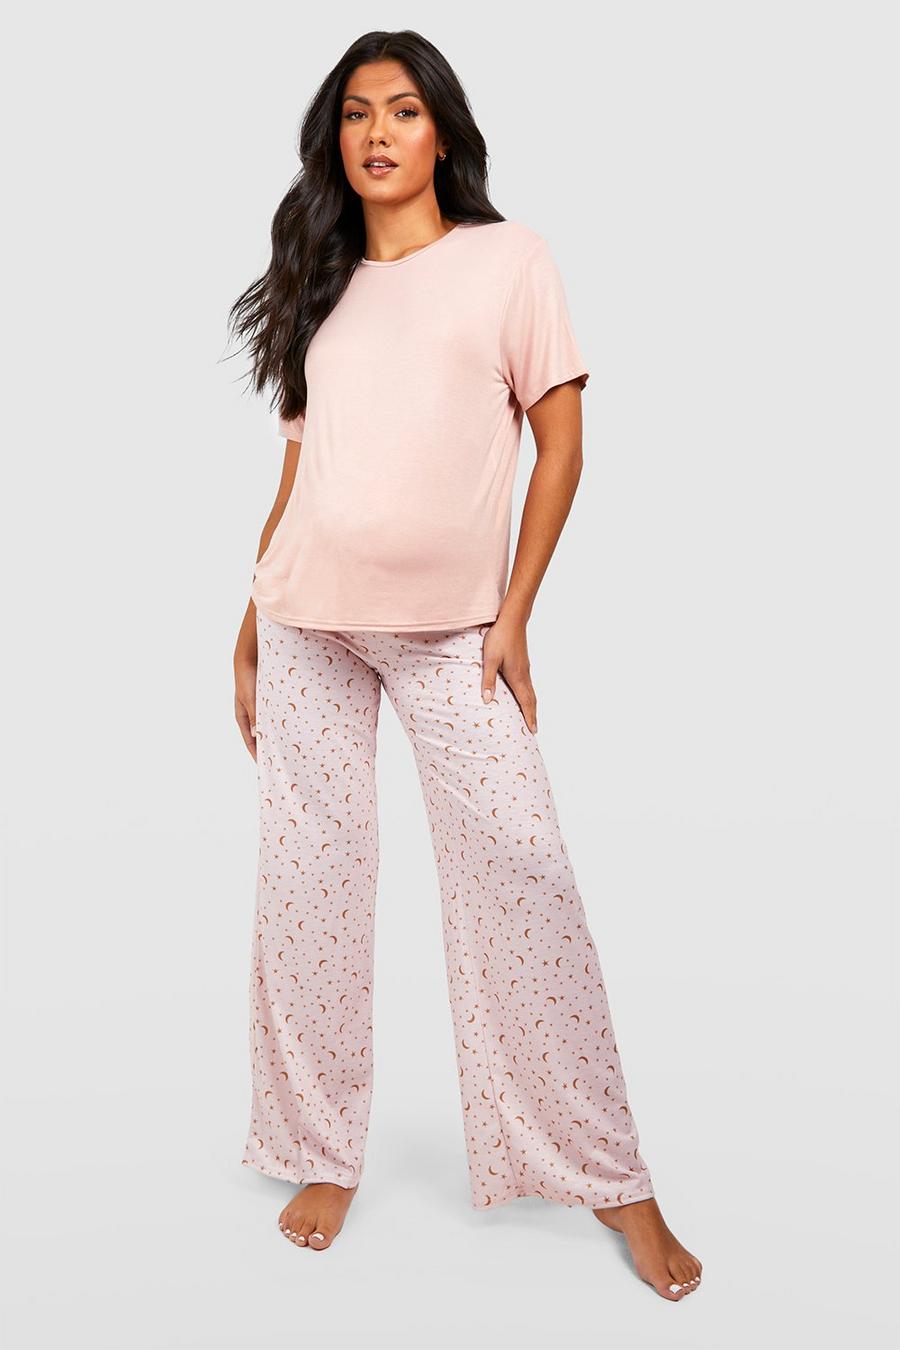 Blush Maternity Star Print Pyjama Set